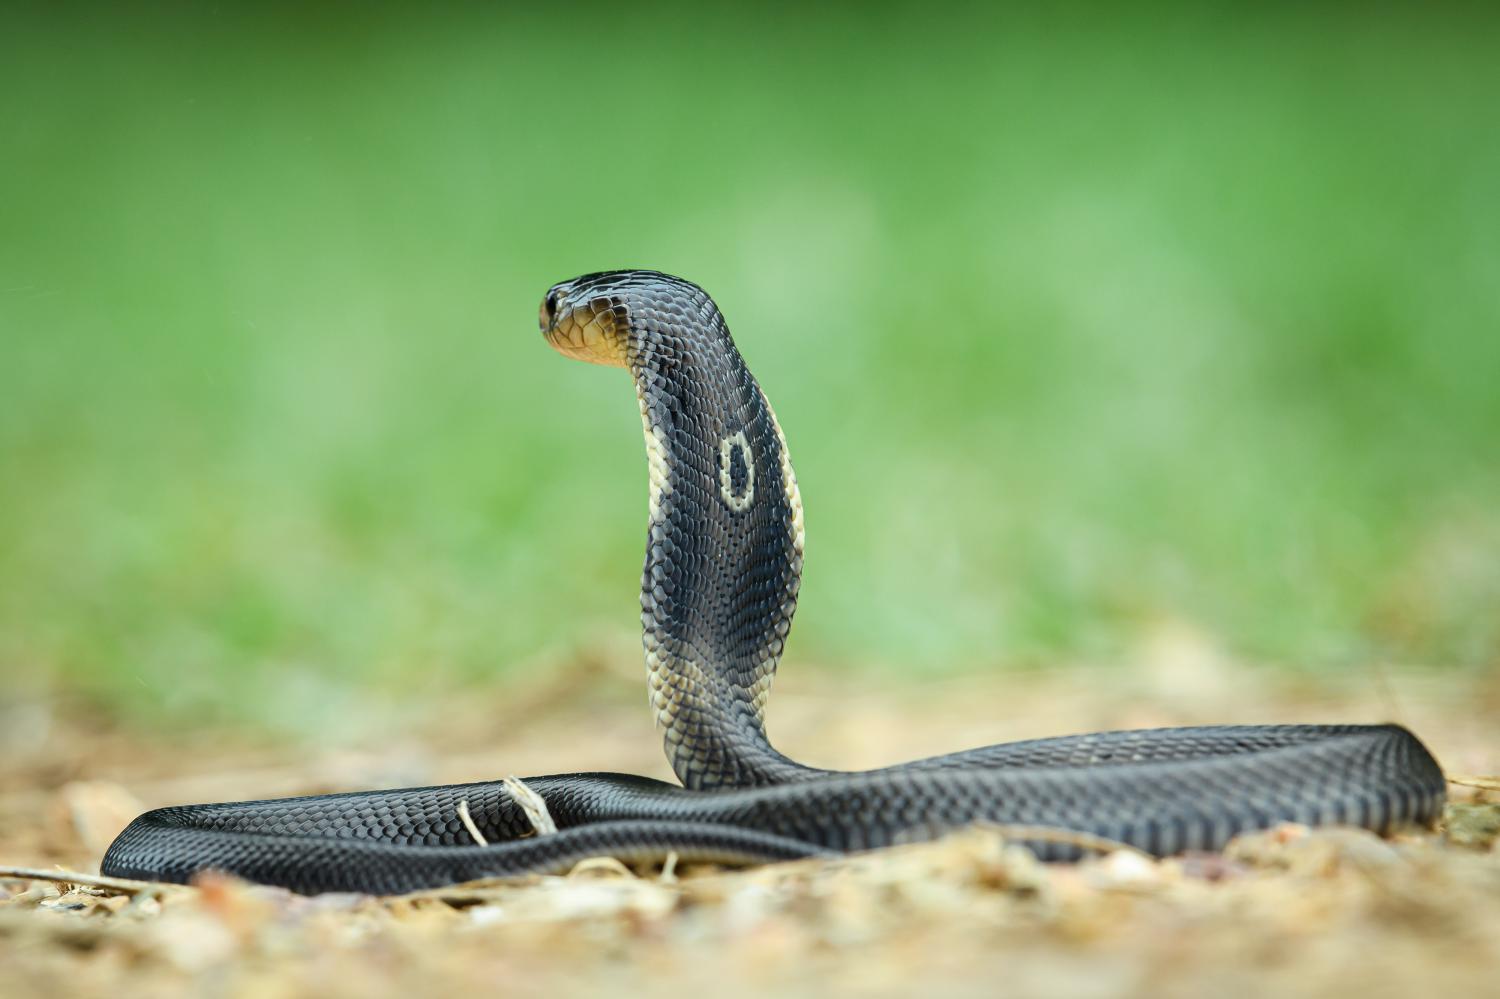 Monocled cobra - Wikipedia